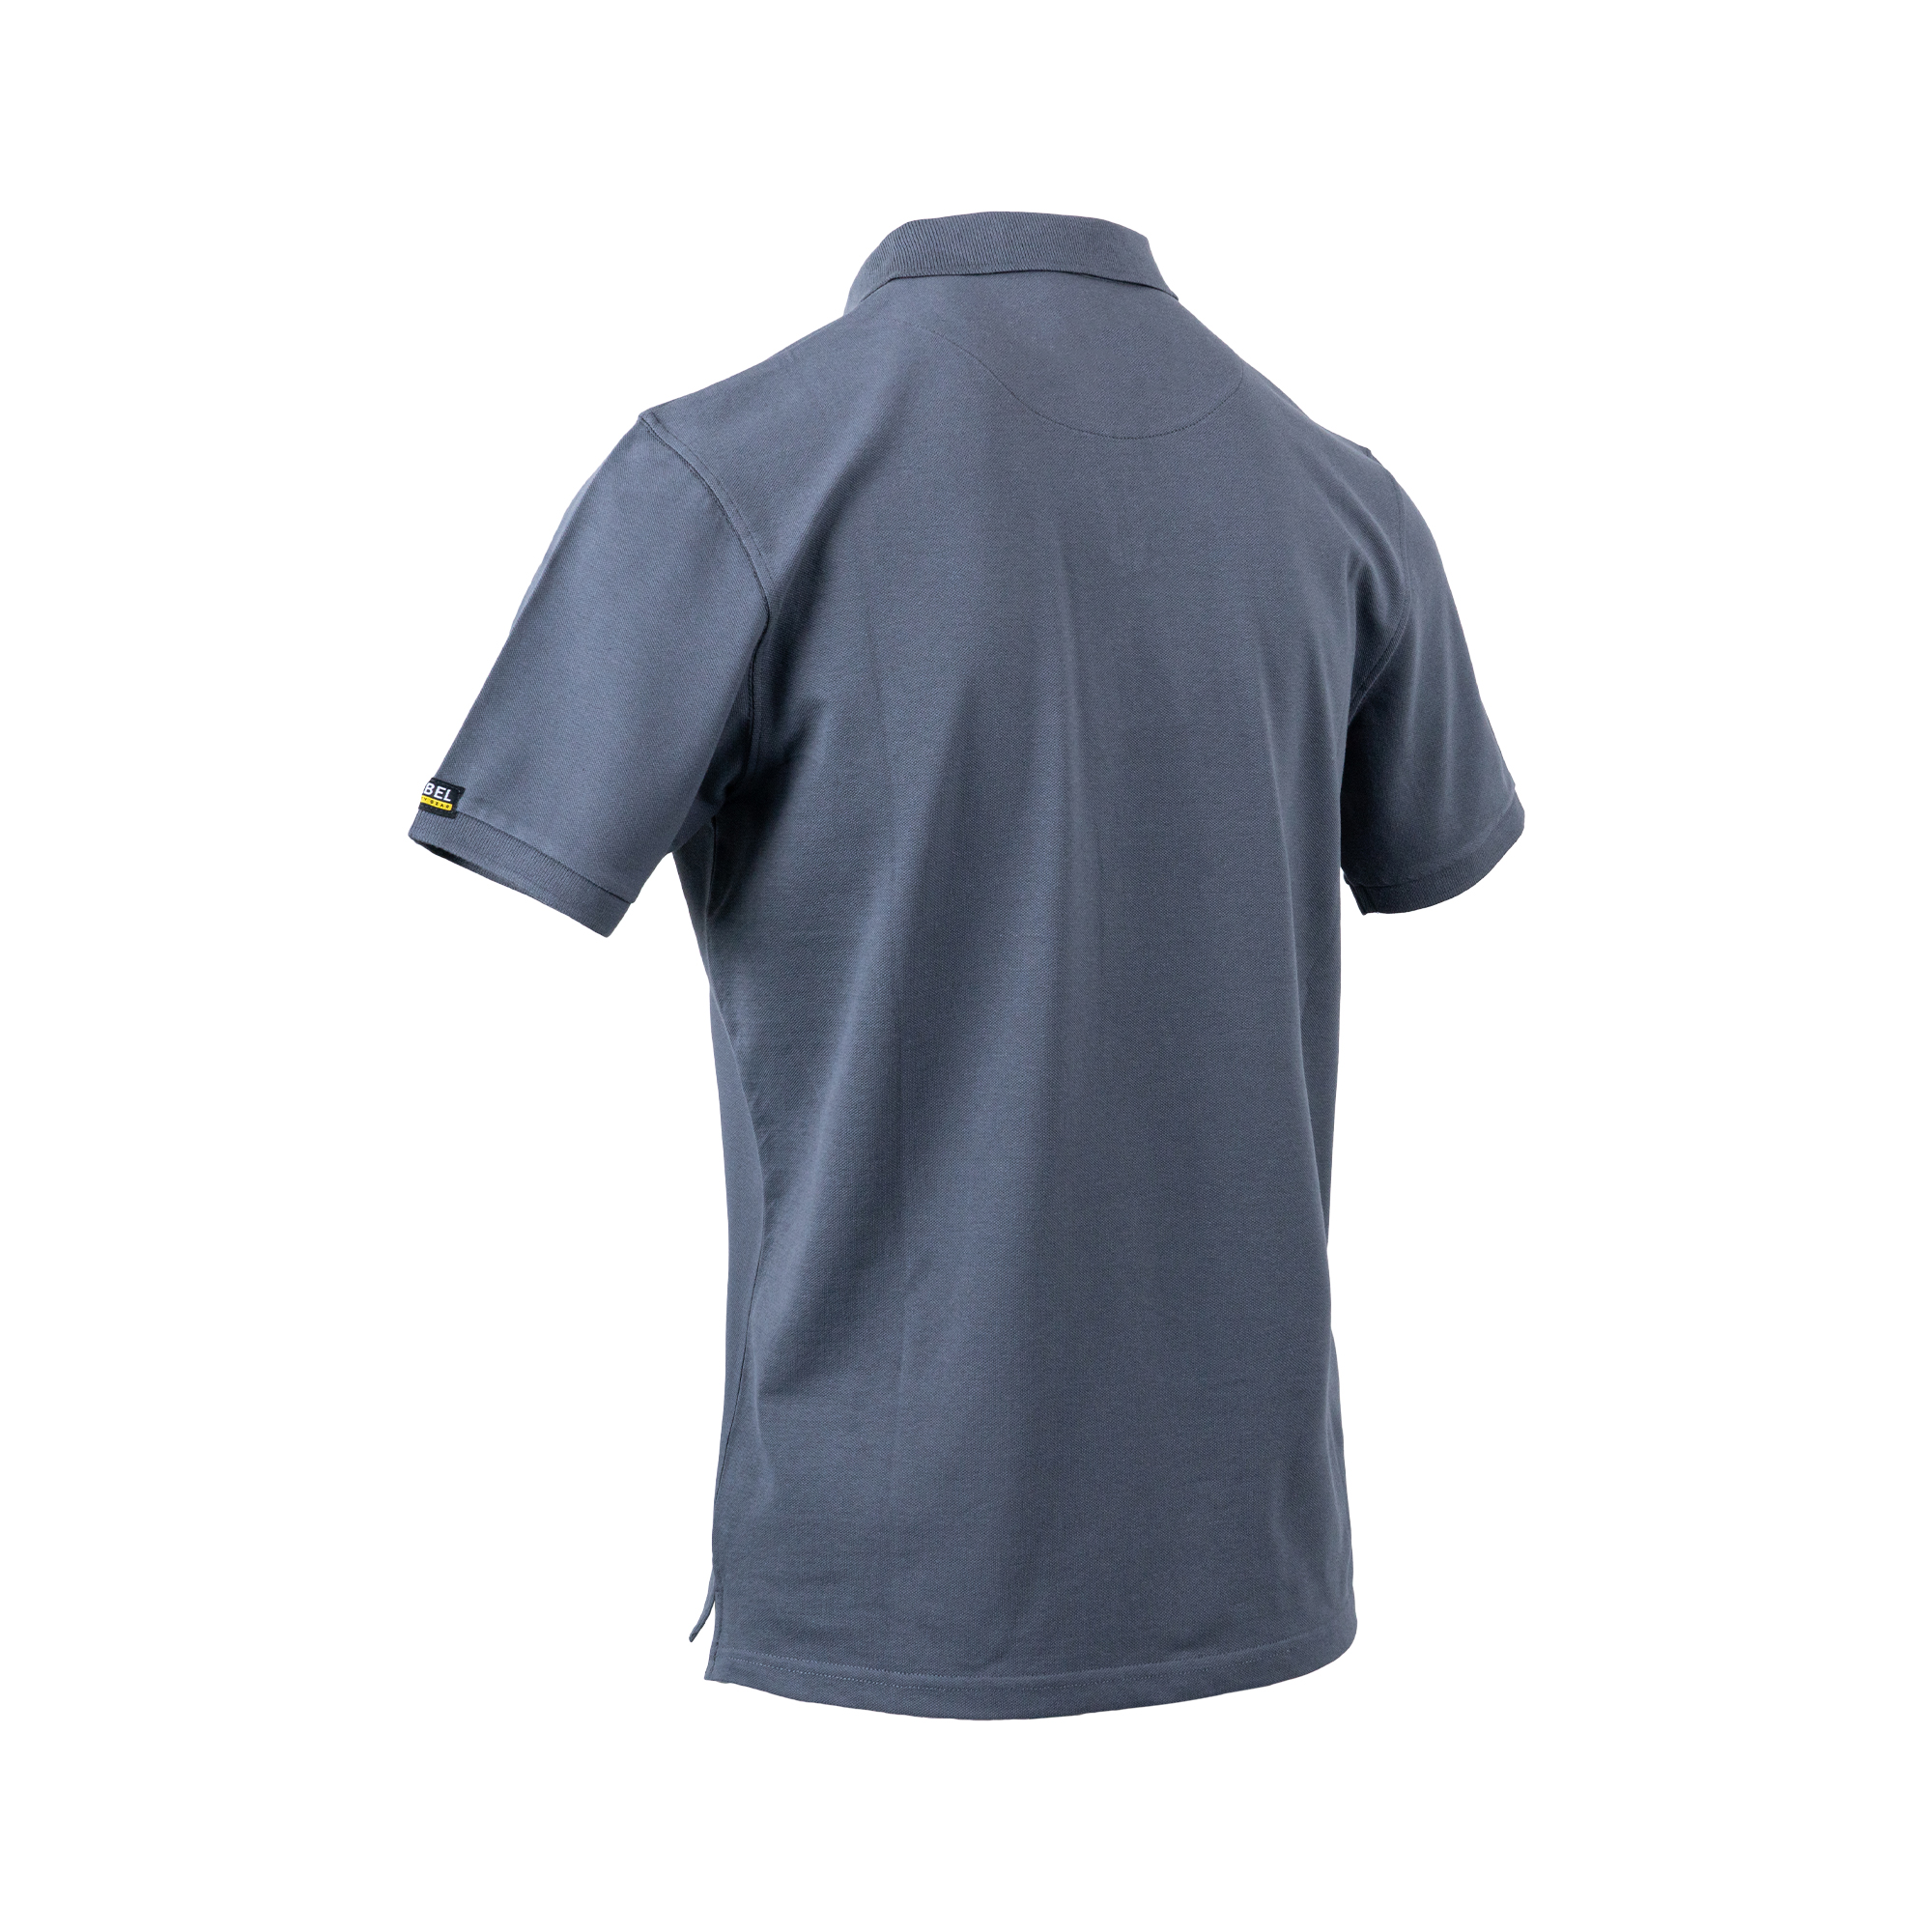 REBEL Work Wear Golf Shirt Grey - REBEL Safety Gear